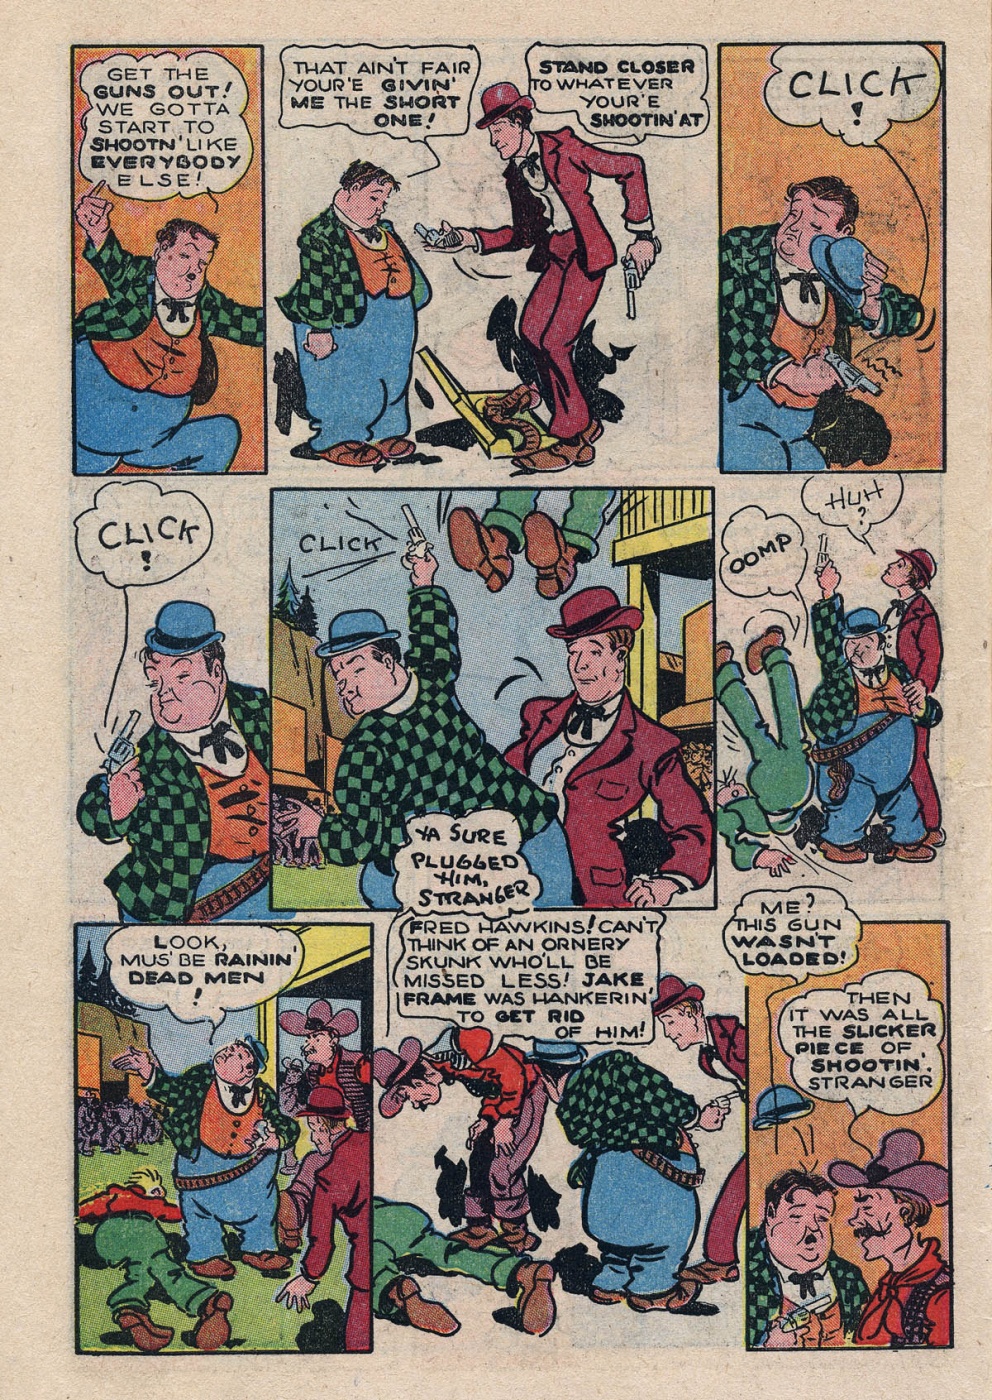 Funny Comic Strips - Abbott and Costello 001 (Feb 1948) 6